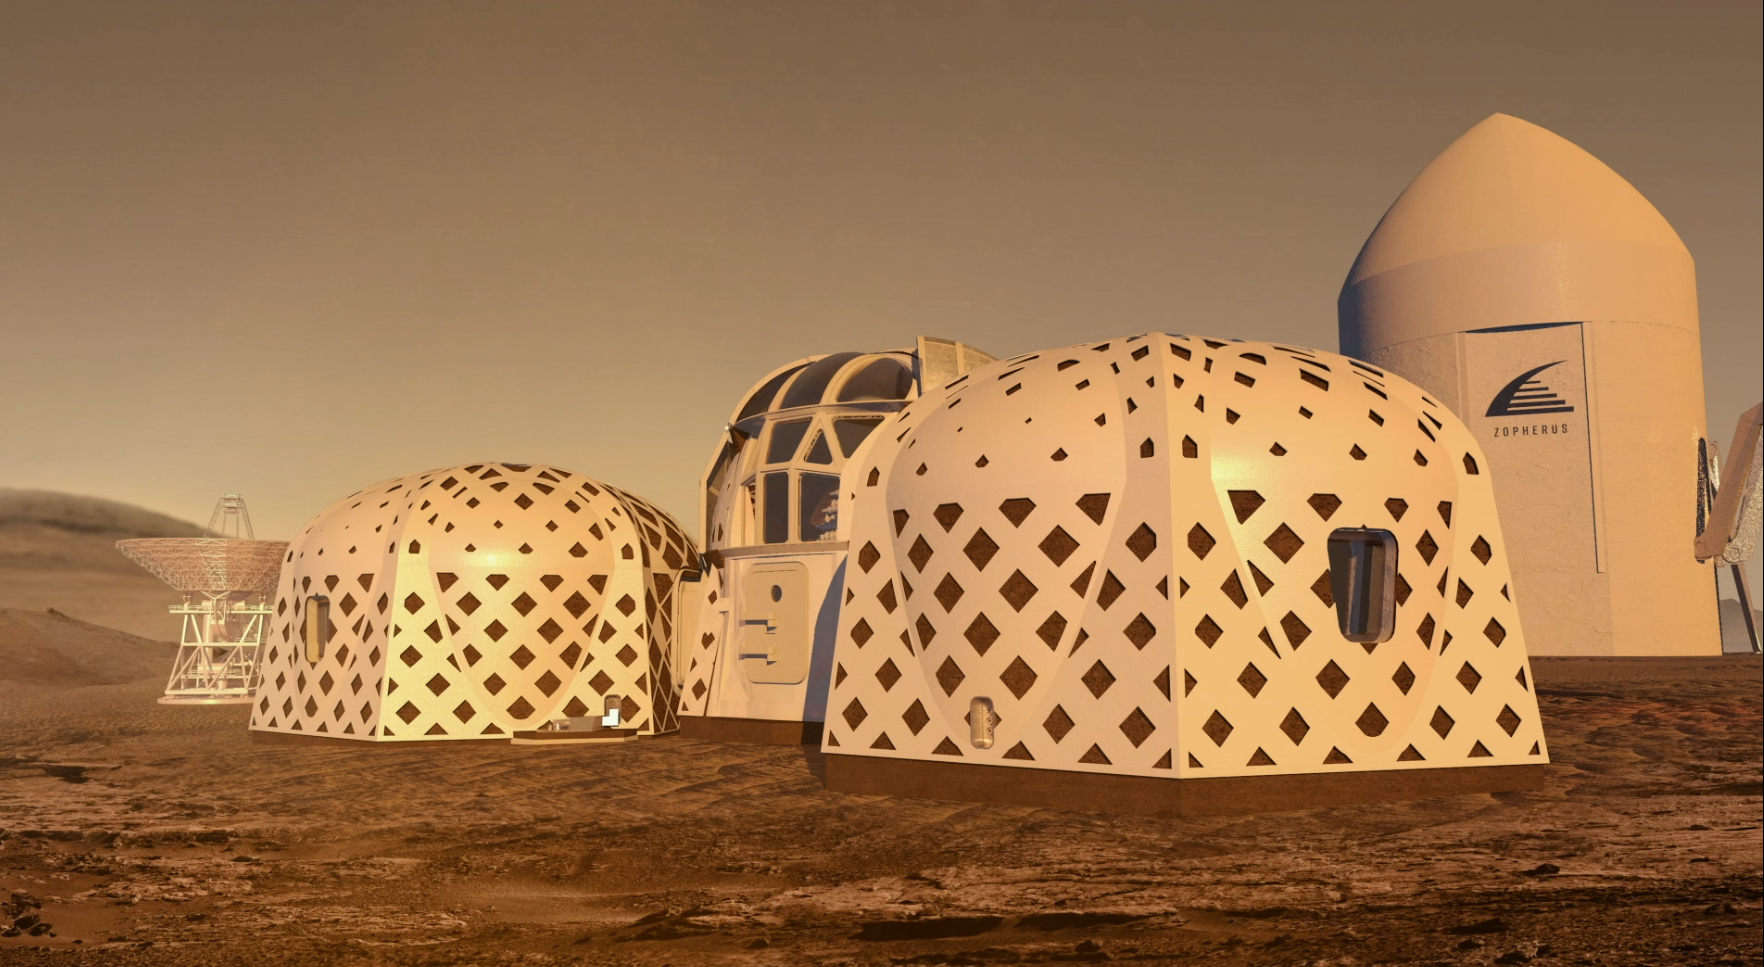 3D-Printed Habitat Challenge - NASA